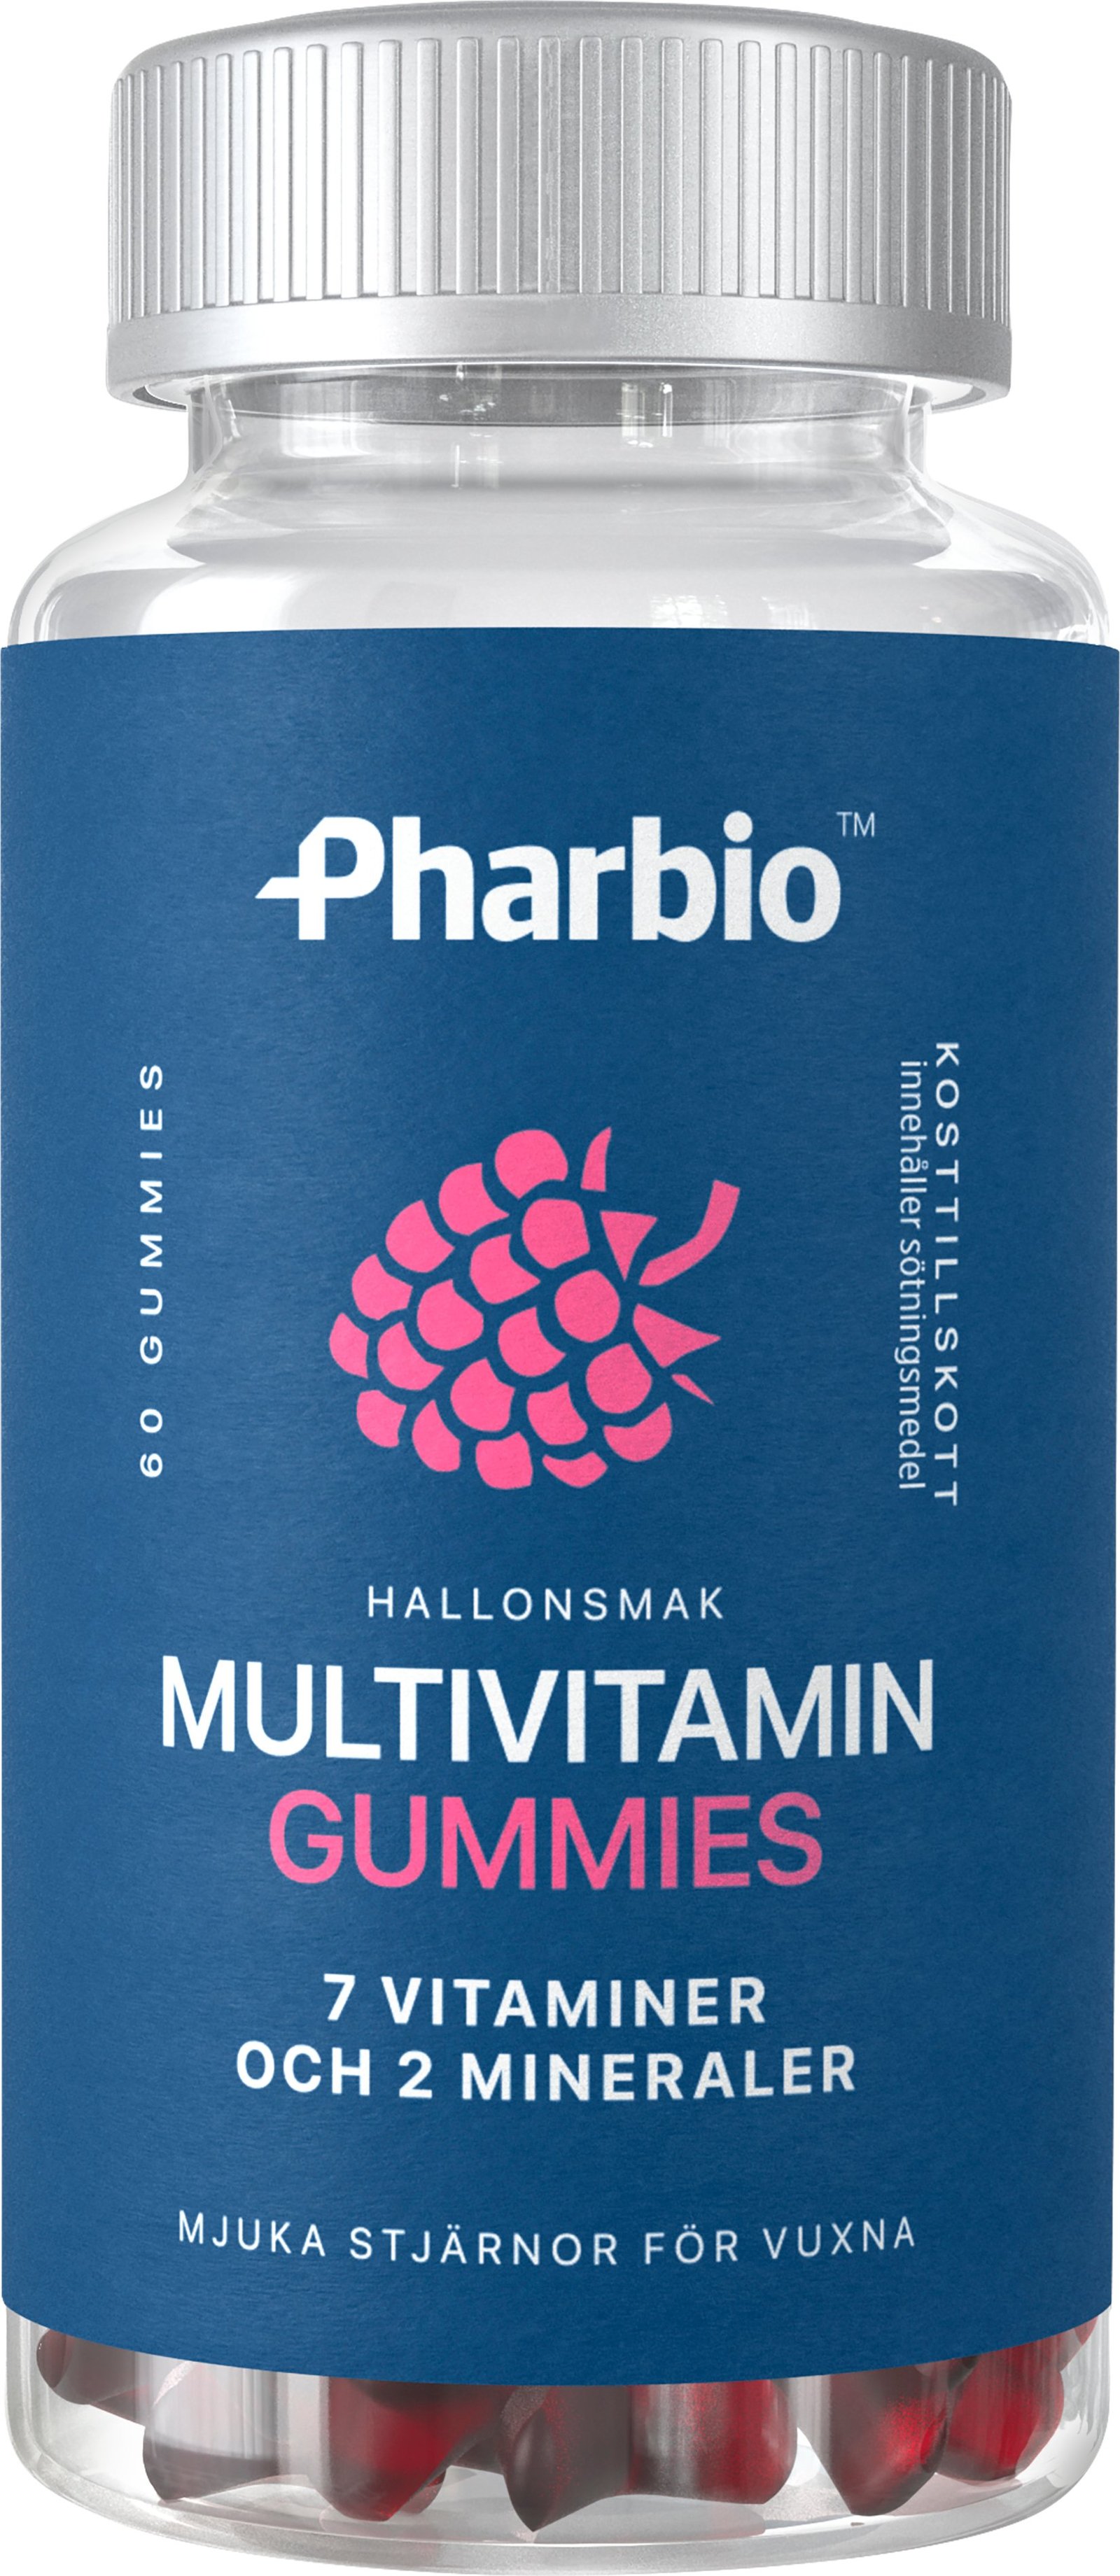 Pharbio Multivitamin Gummies 60 tuggtabletter